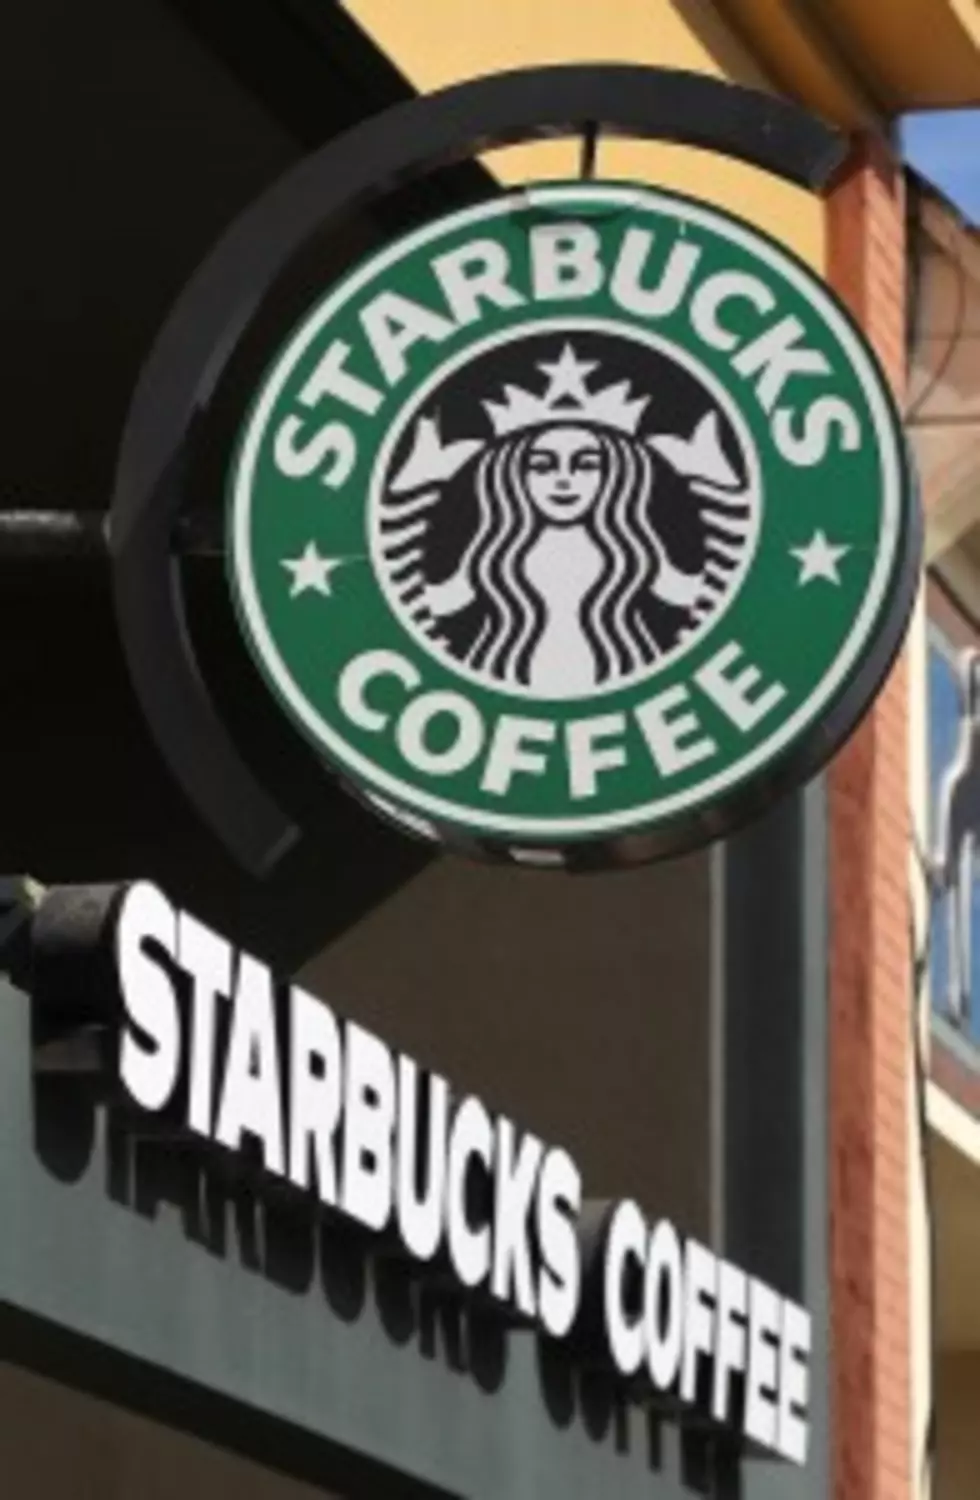 New (And Bigger) Size At Starbucks